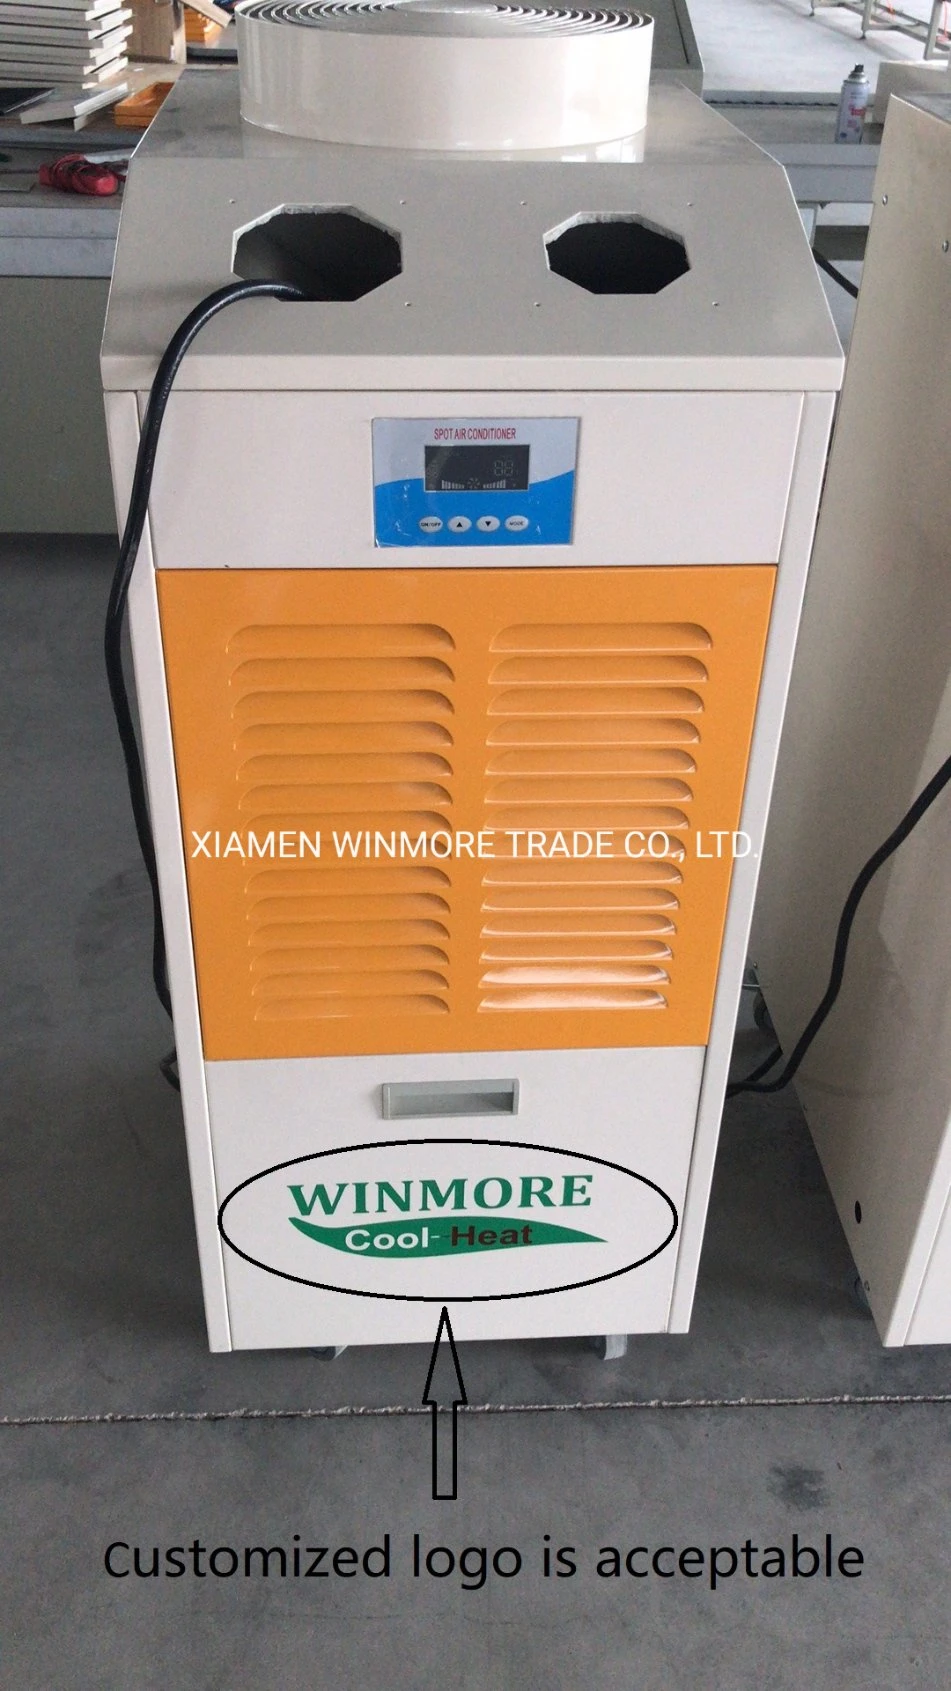 Portable Air Conditioner /Spot Air Conditioner /Industrial Air Conditioner/Central Air Conditioner